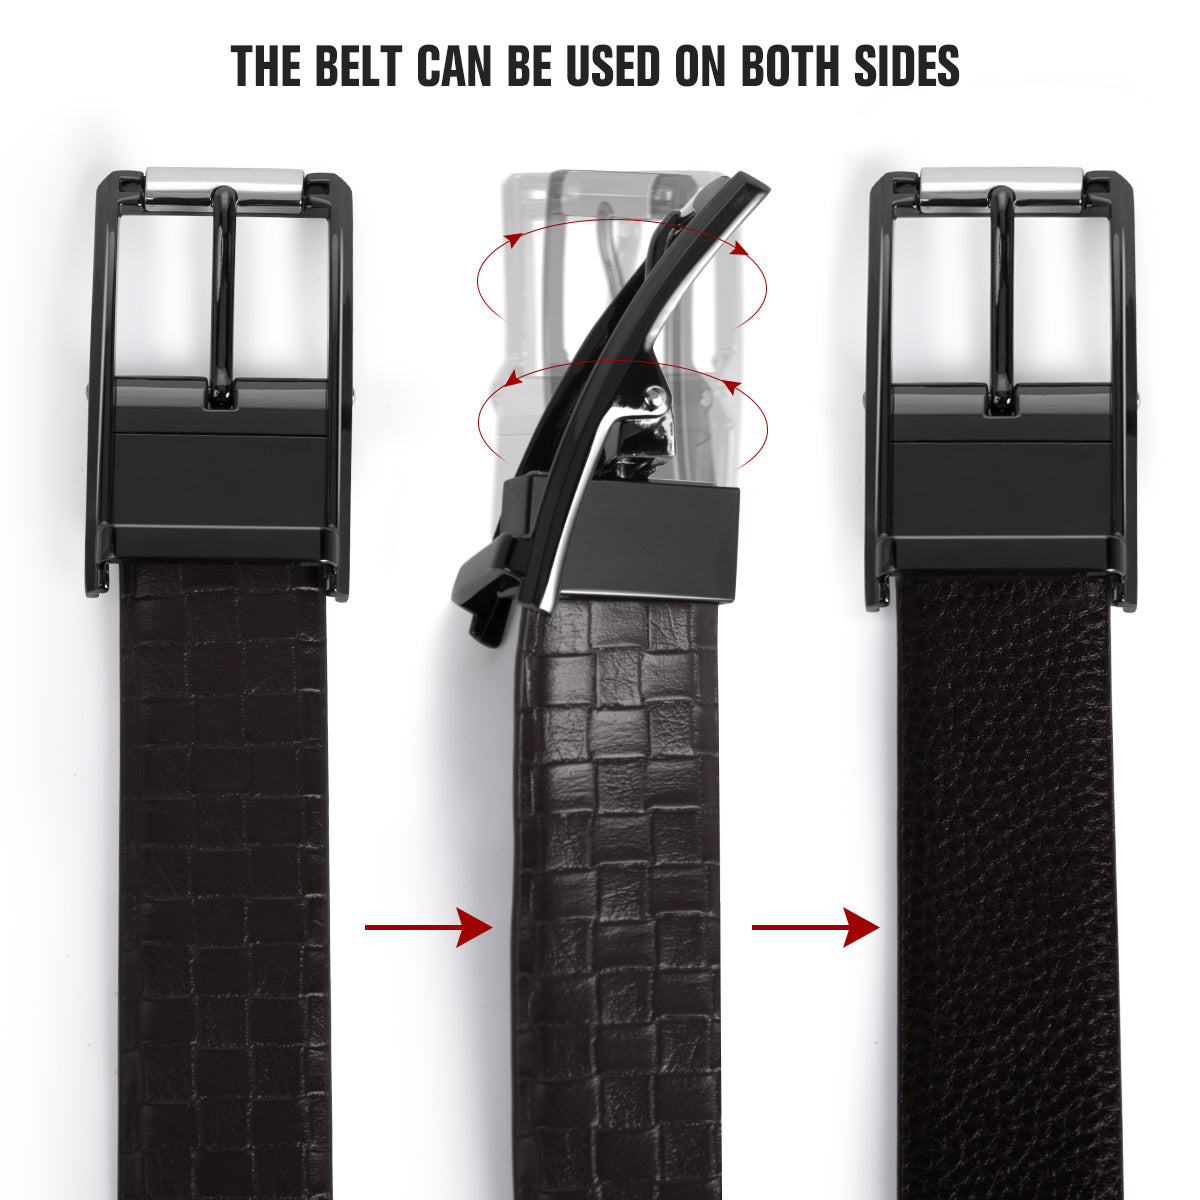 Black Reversible Japanese Pin Buckle Belt Black